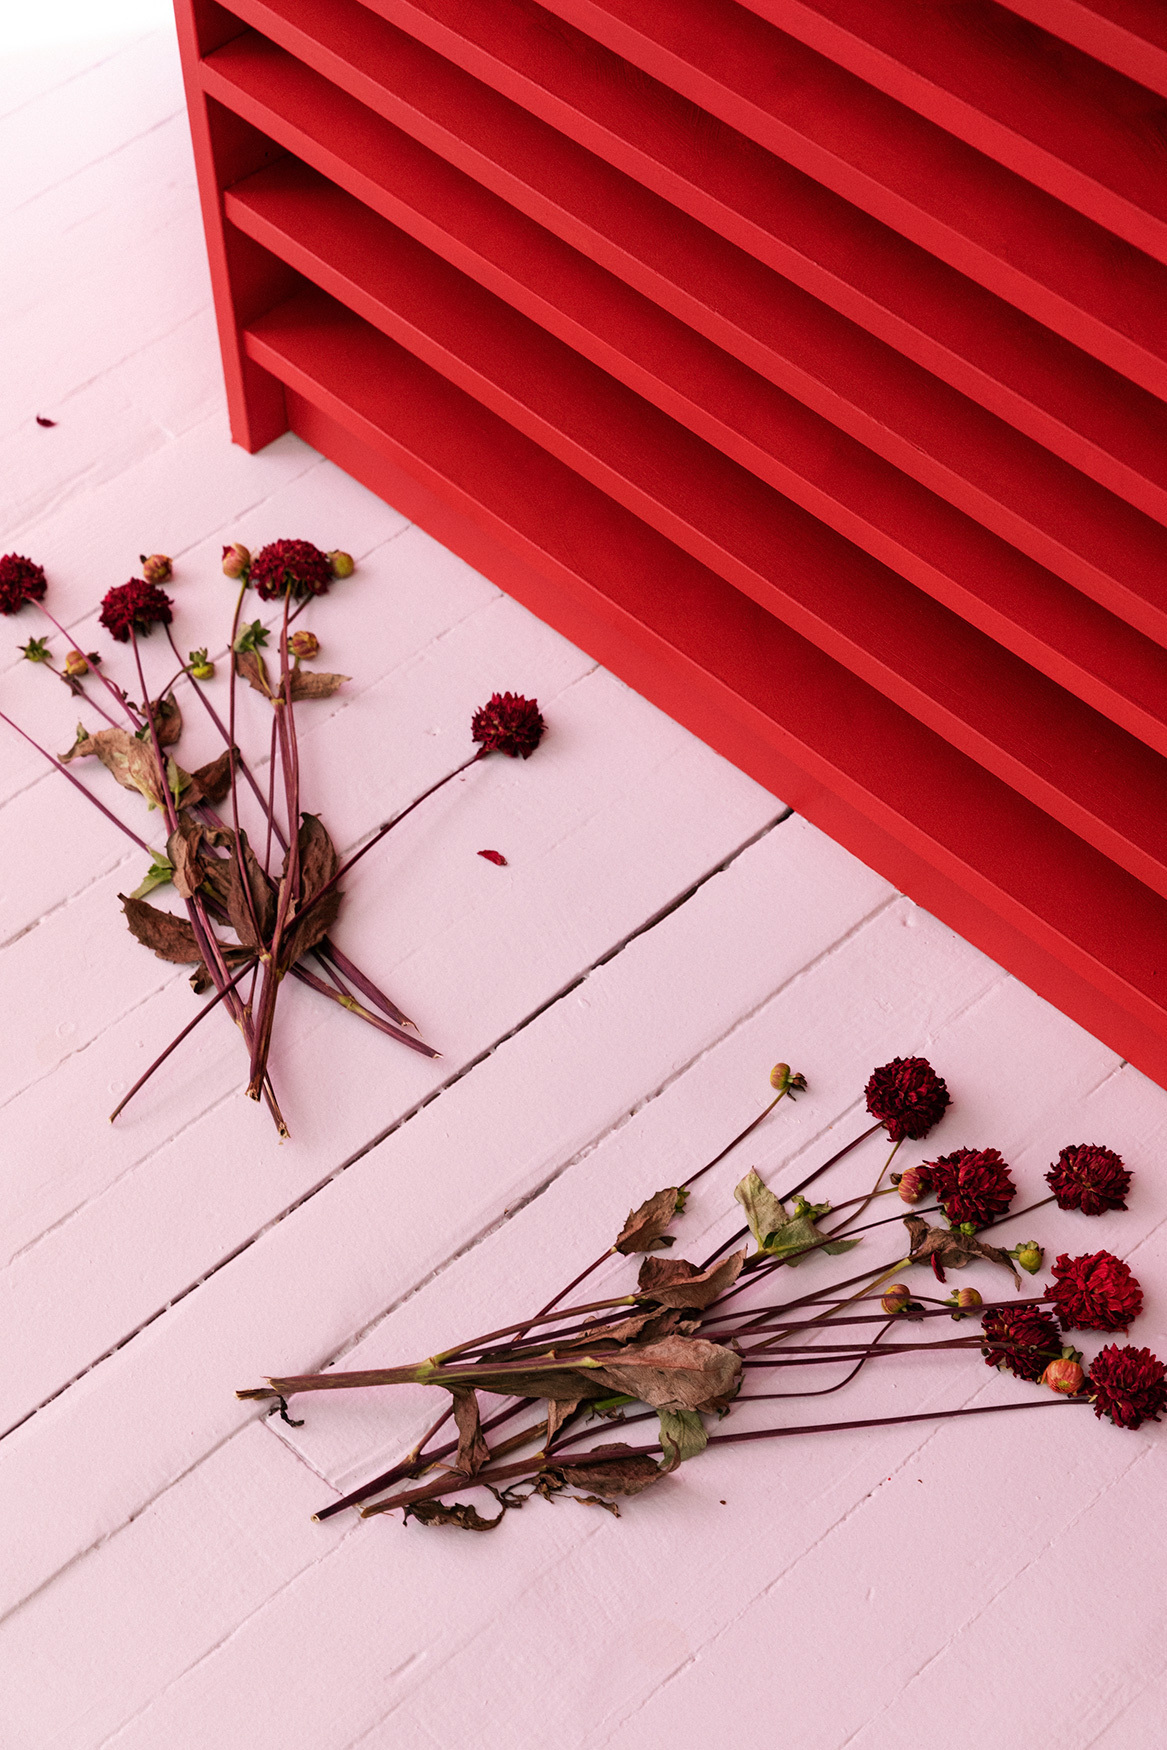 Anton Benois, Gis Bort, 2020, Ikea billy shelves, fresh flowers, red paint, 3.15H x .90W